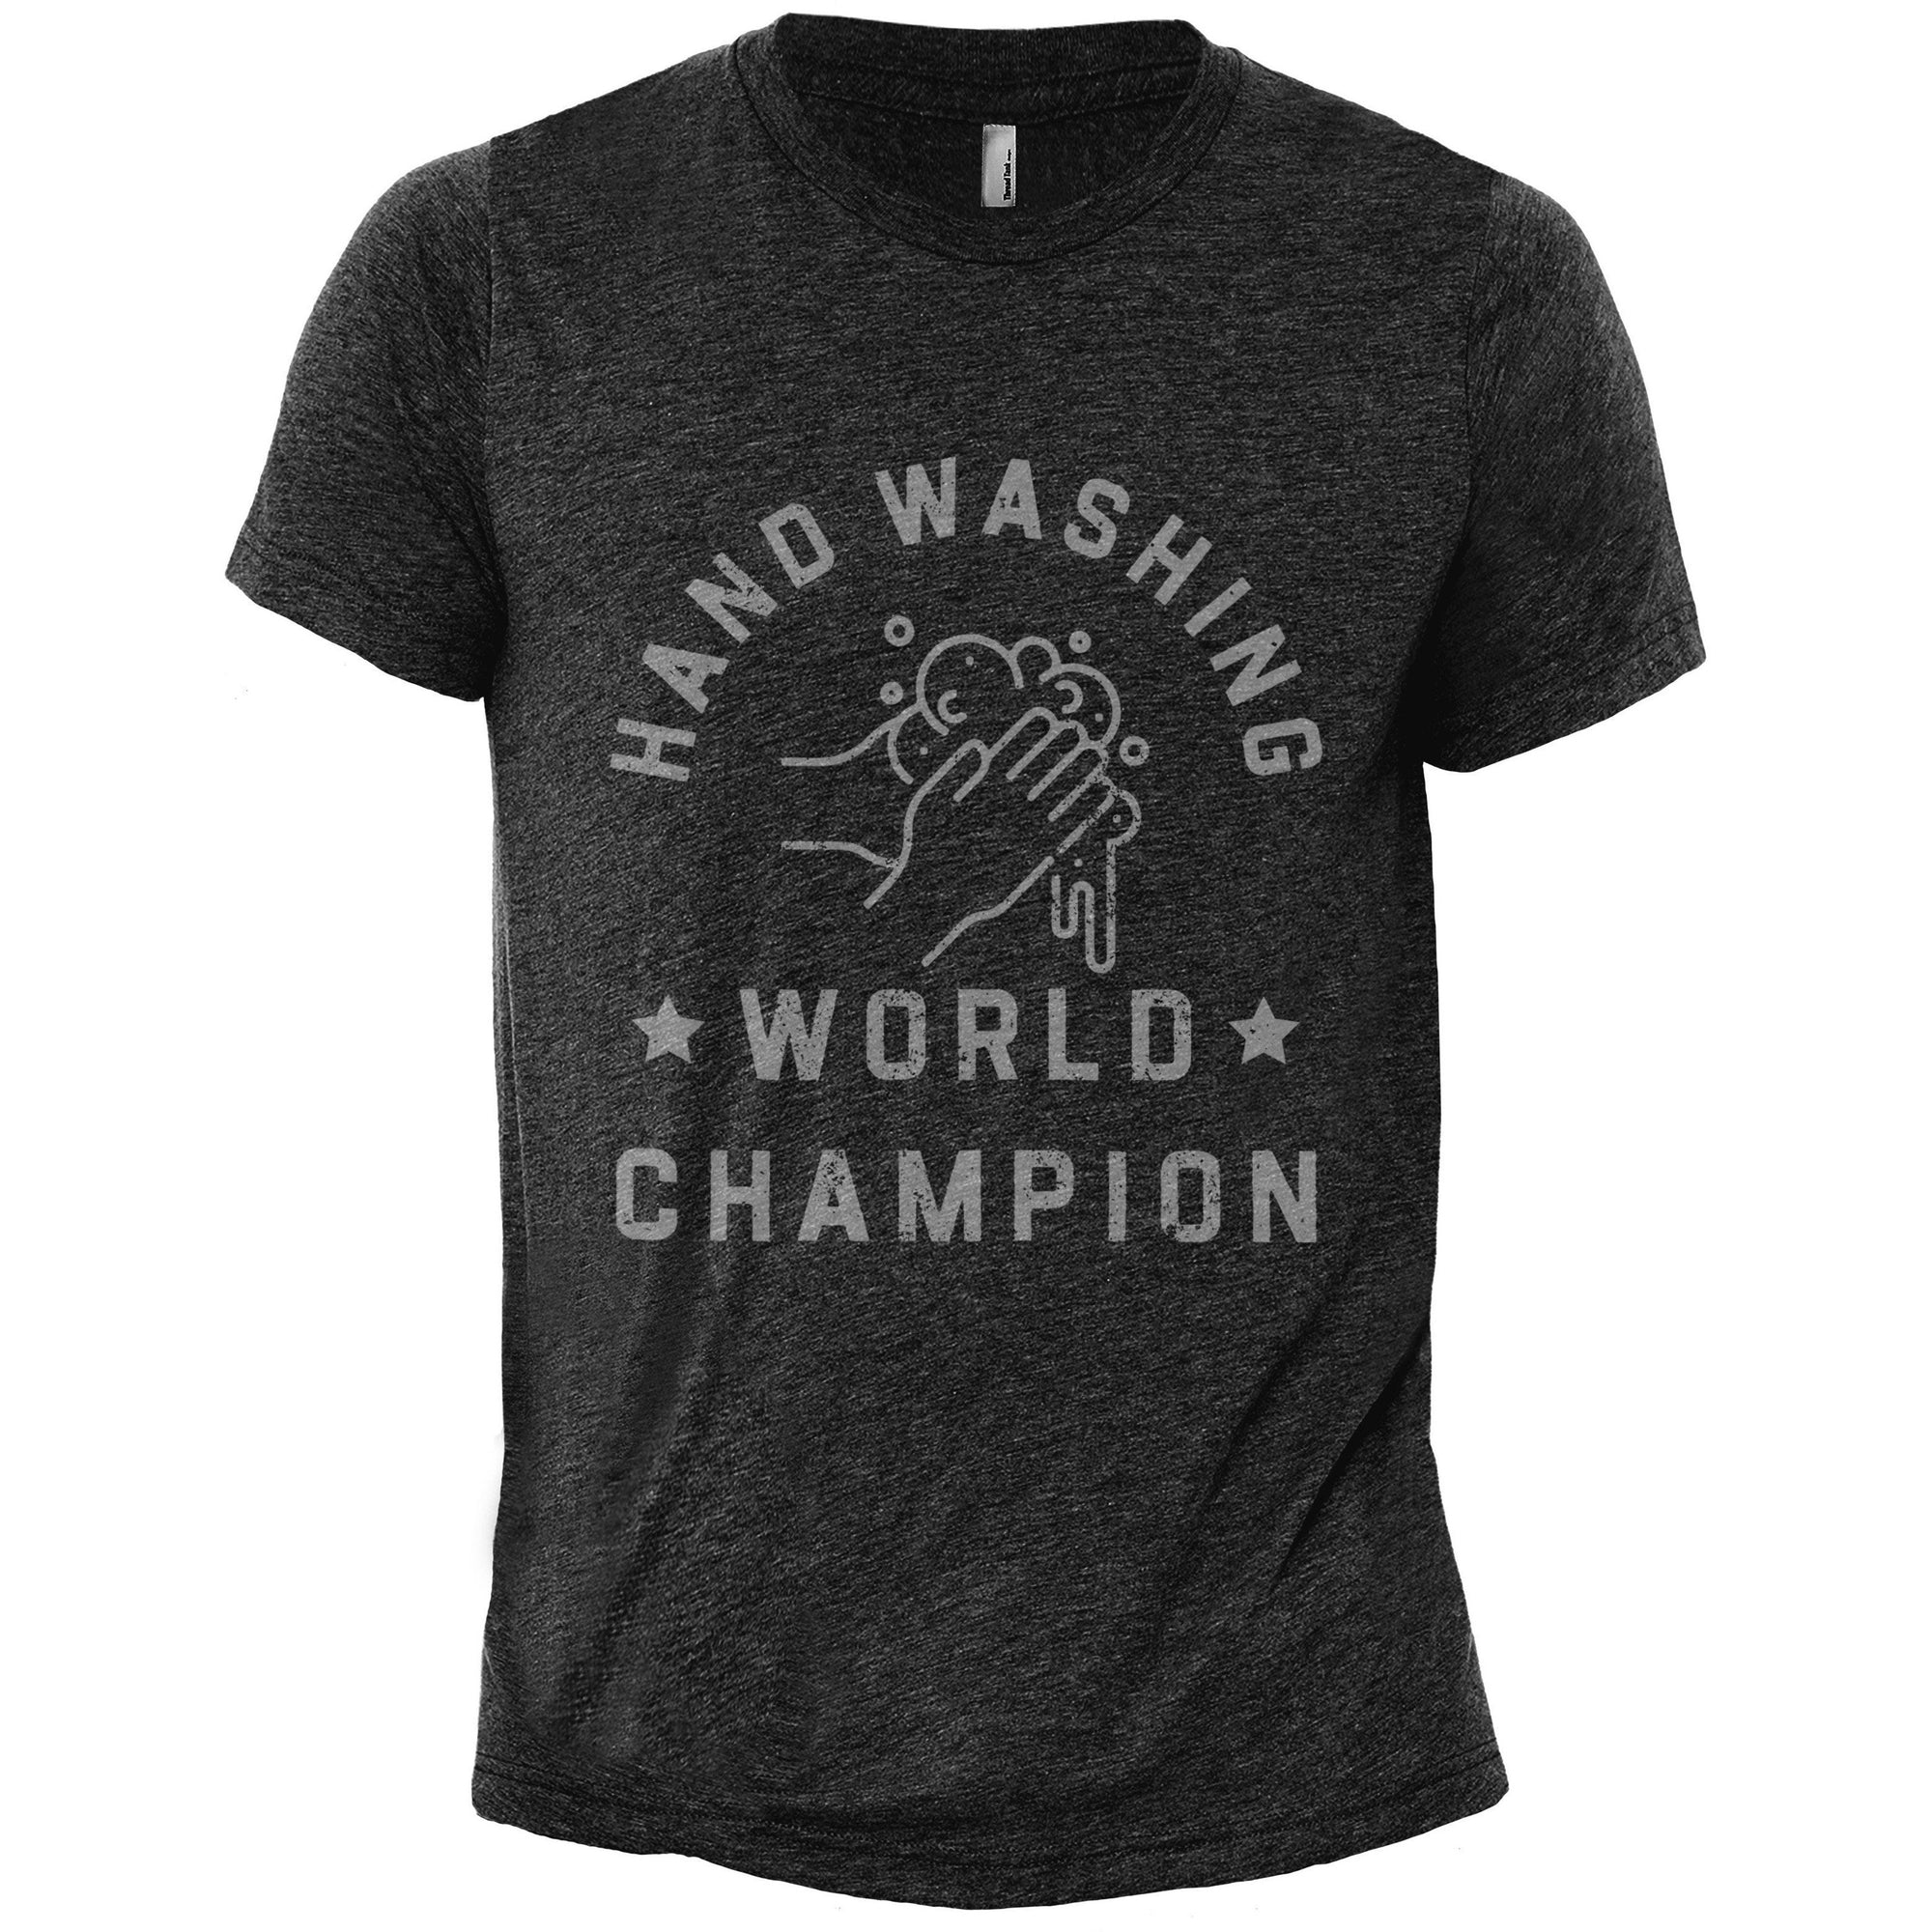 Hand Washing World Champion Heather Grey Printed Graphic Men's Crew T-Shirt Tee